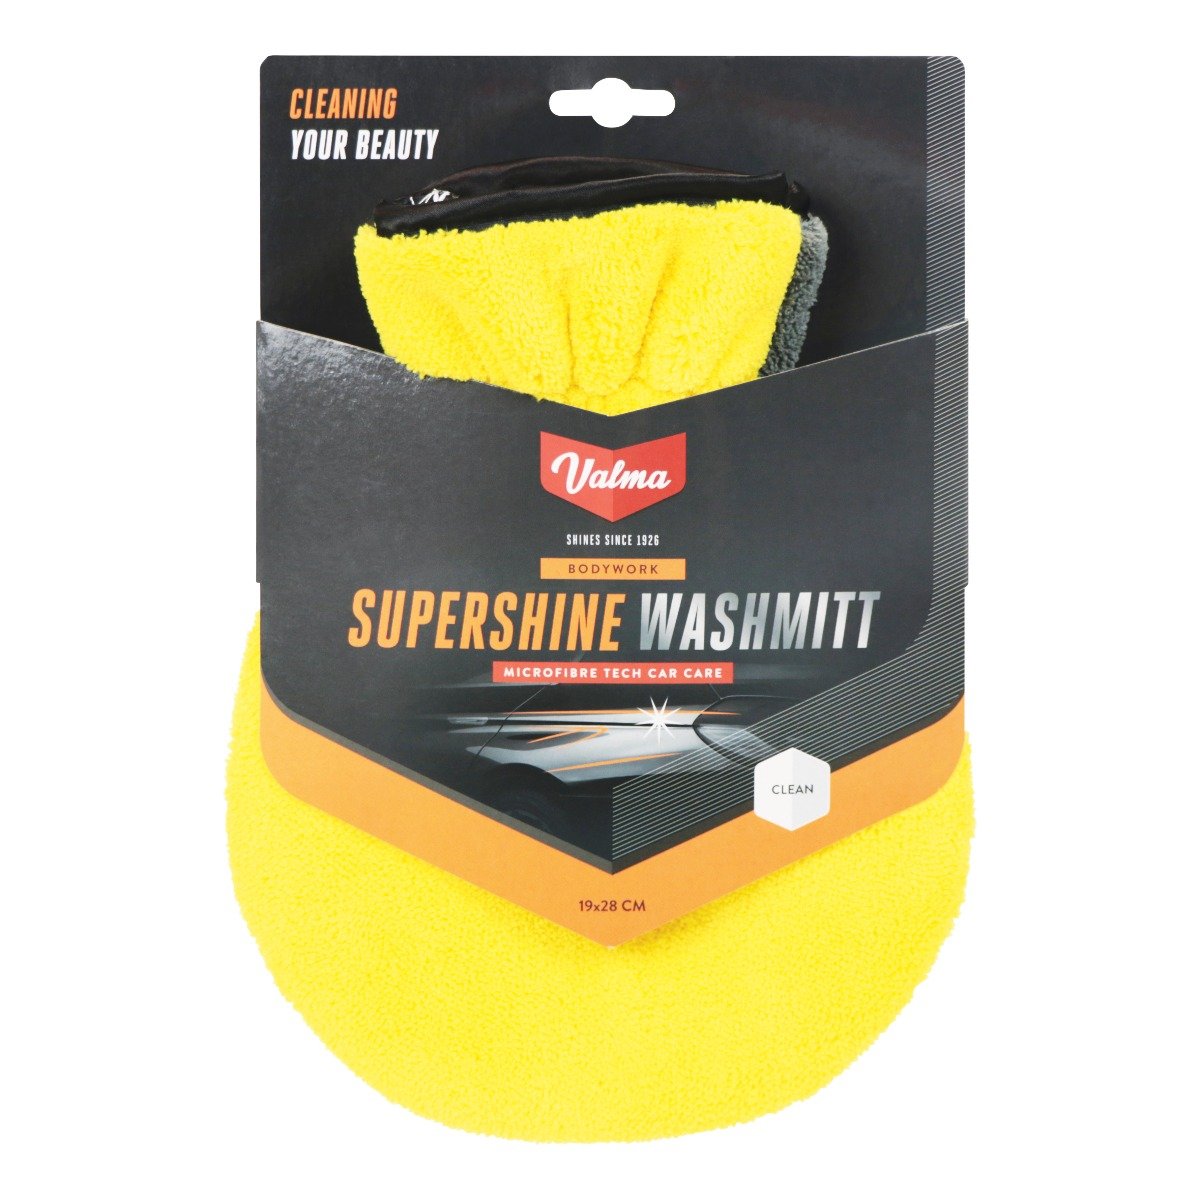 Supershine Washmitt